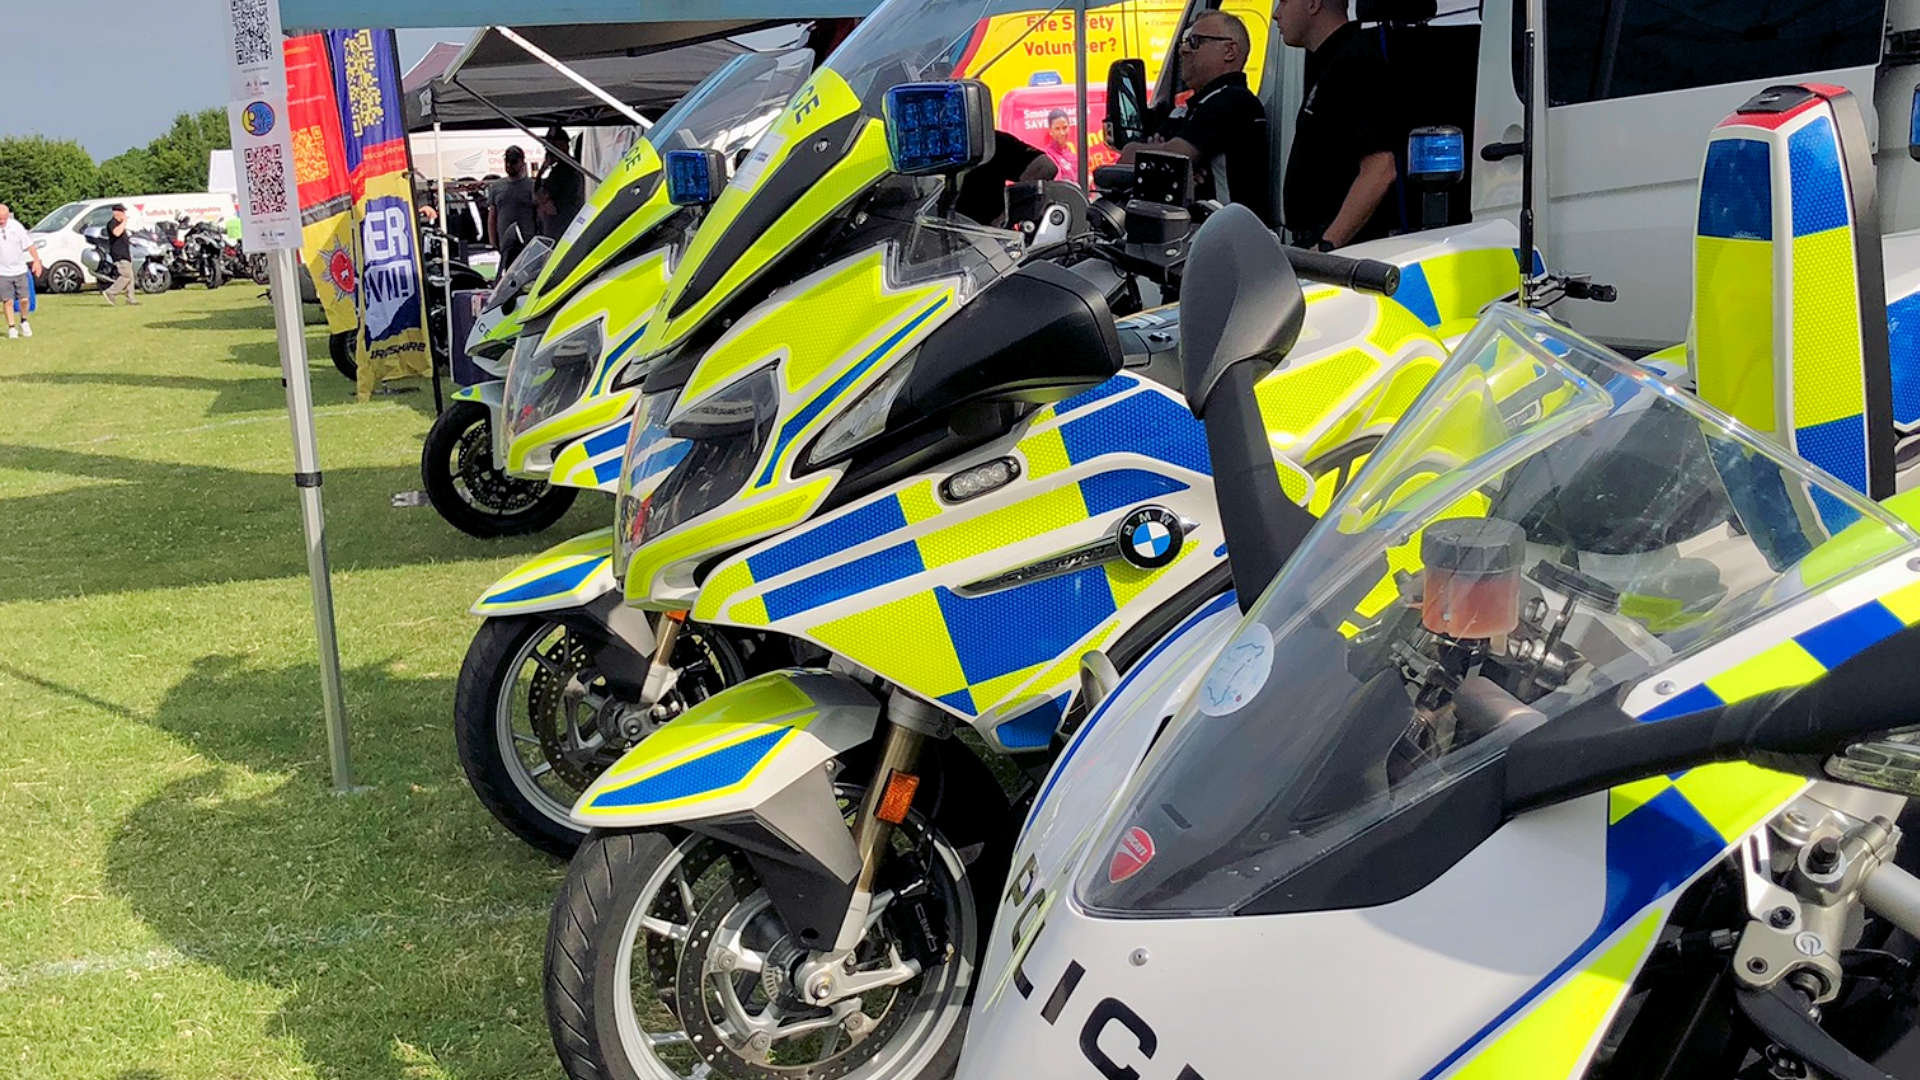 Police motorcyclists Hertfordshire BikeSafe